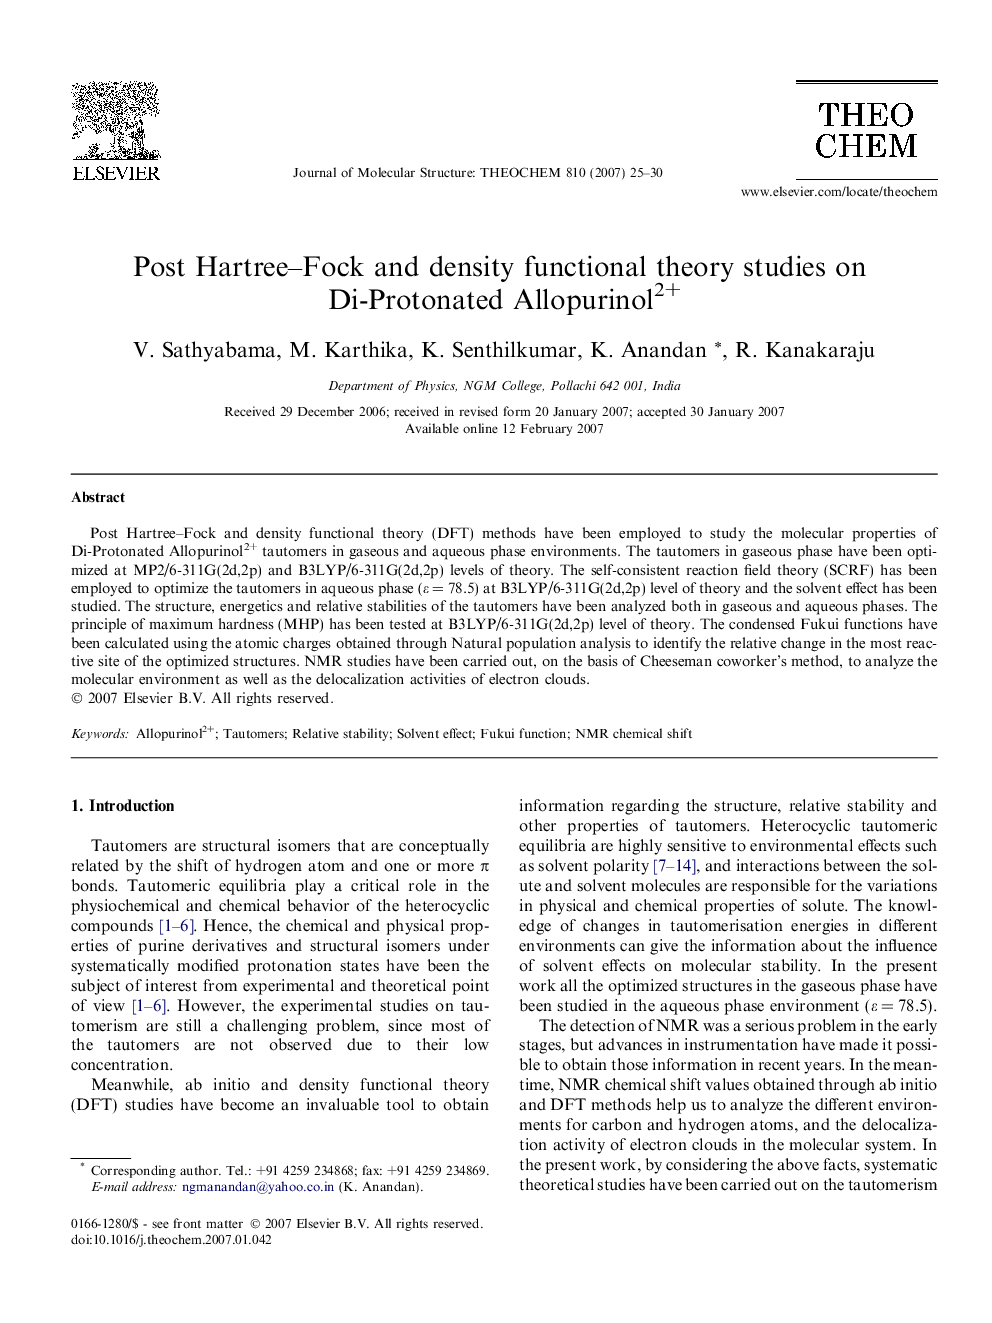 Post Hartree-Fock and density functional theory studies on Di-Protonated Allopurinol2+